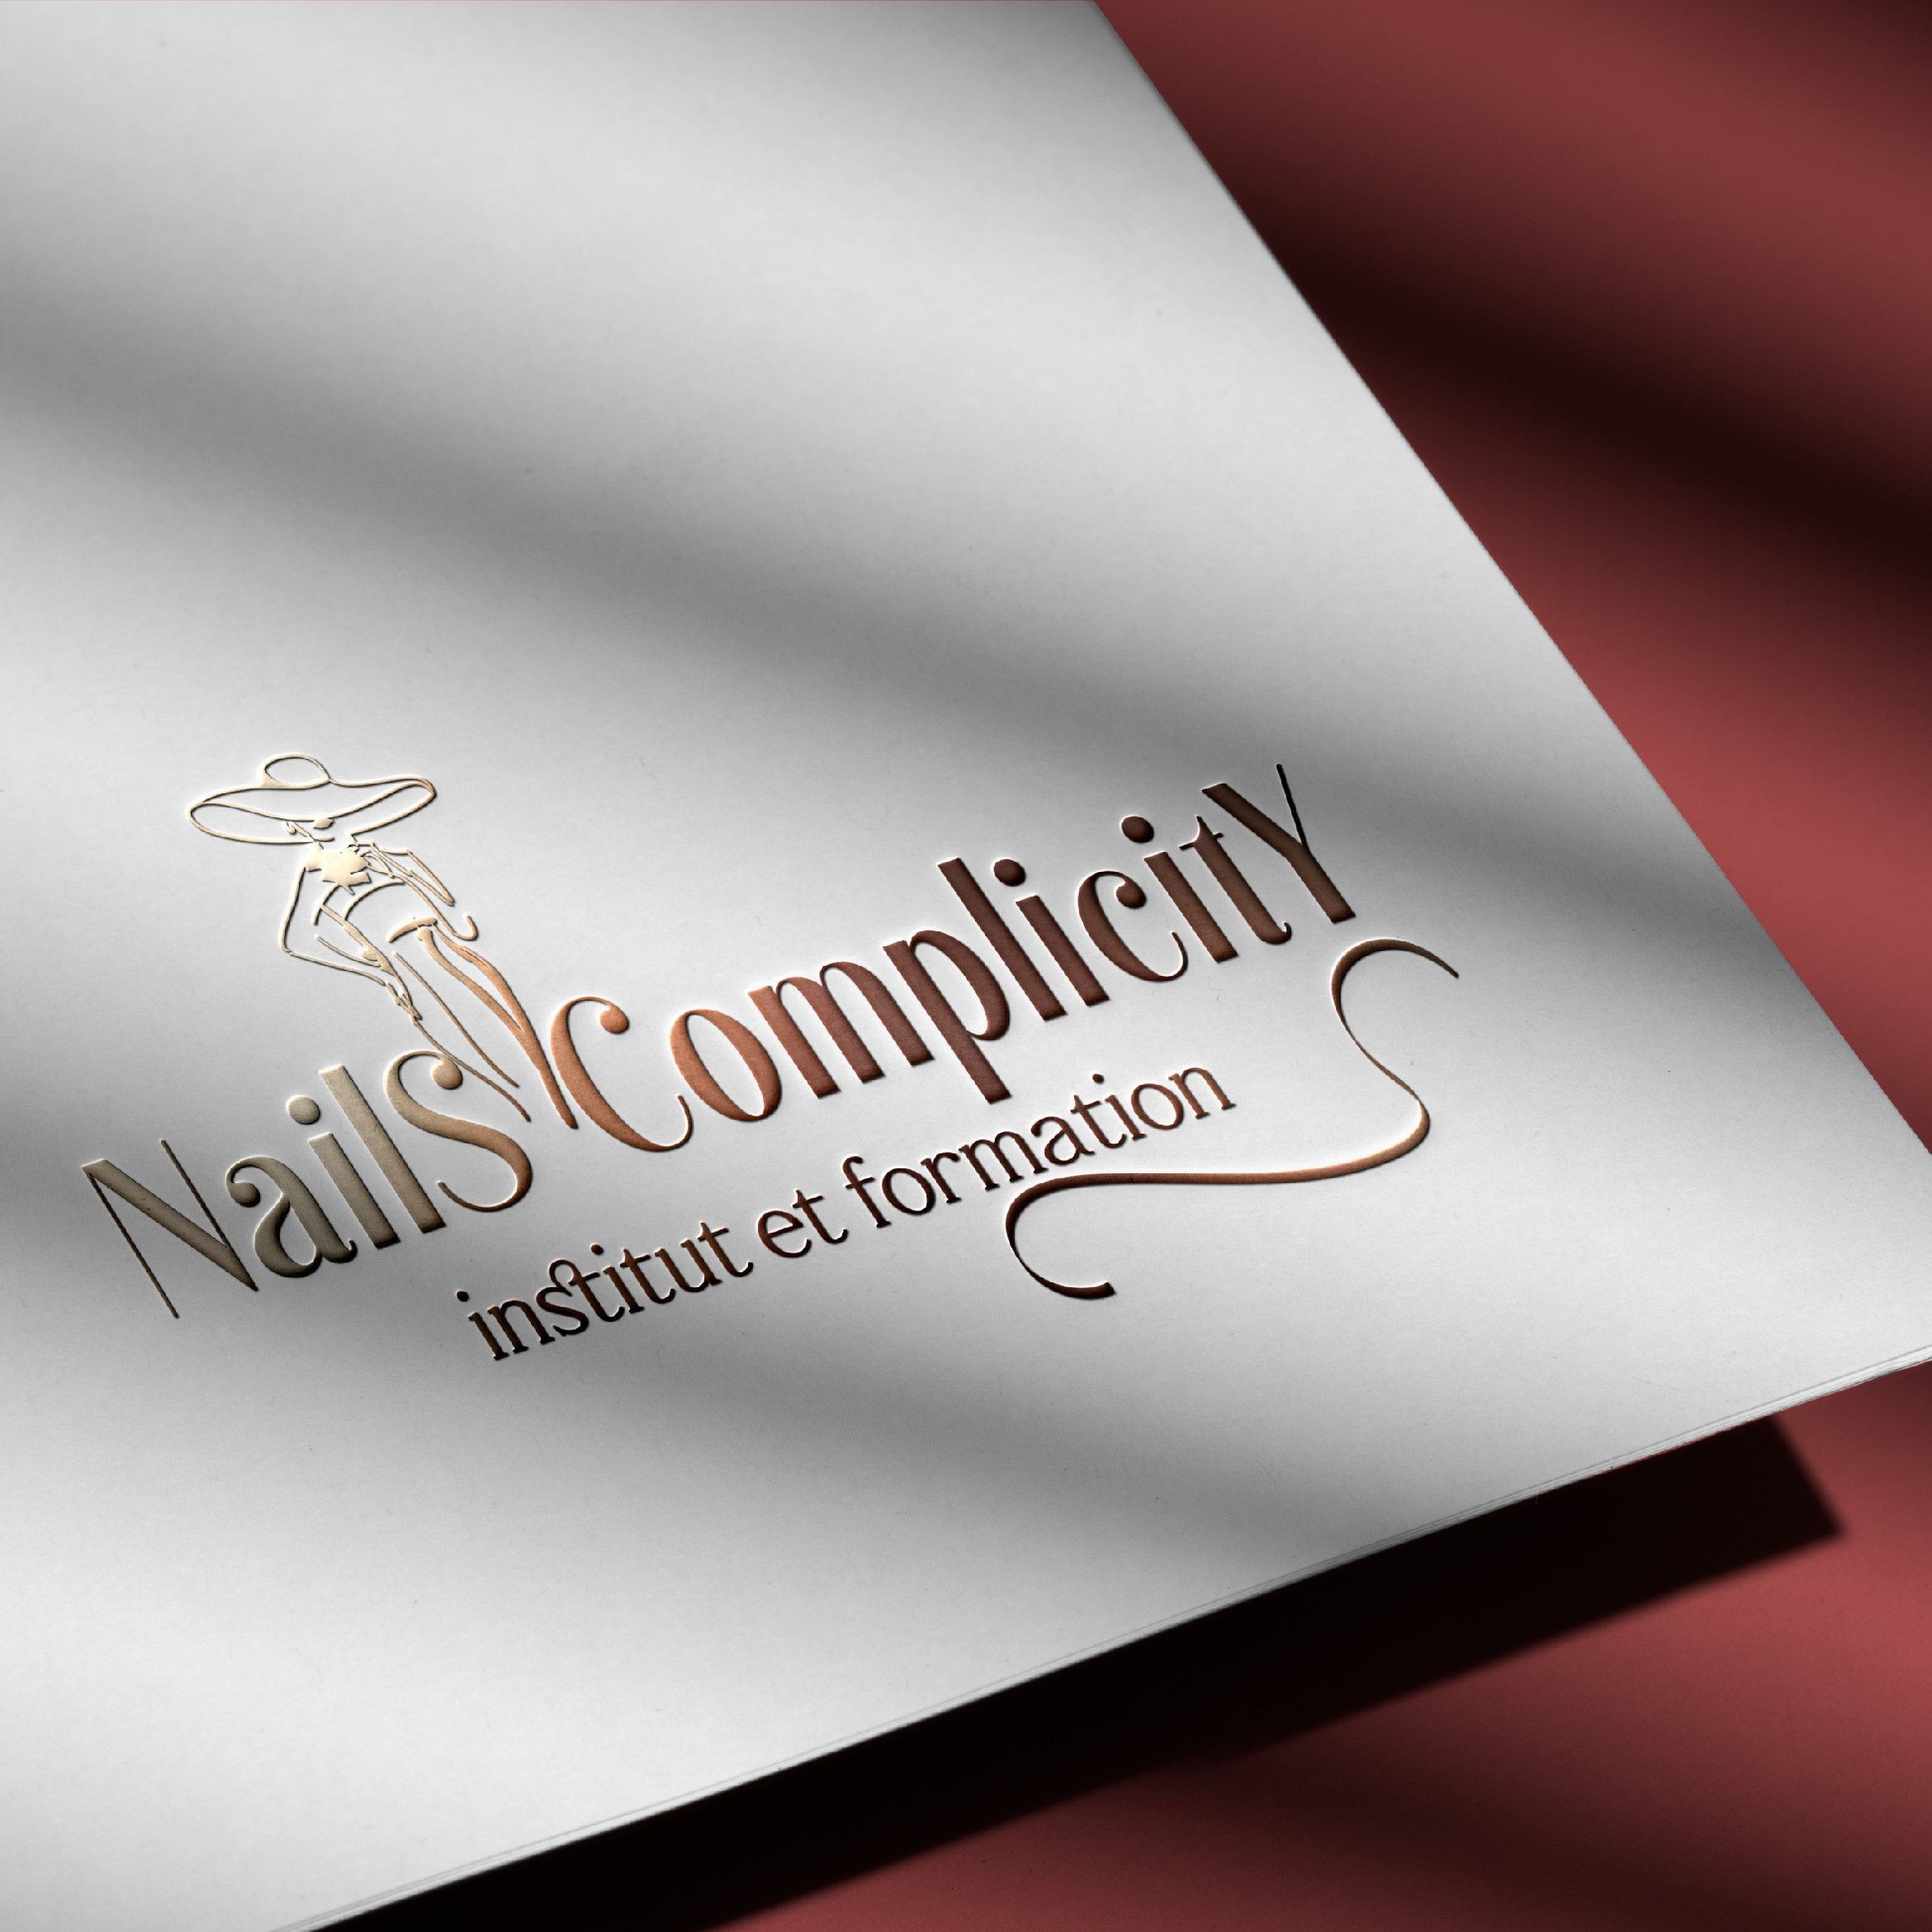 Nails Complicity, 491 Rue de l'Abbaye, 82000, Montauban